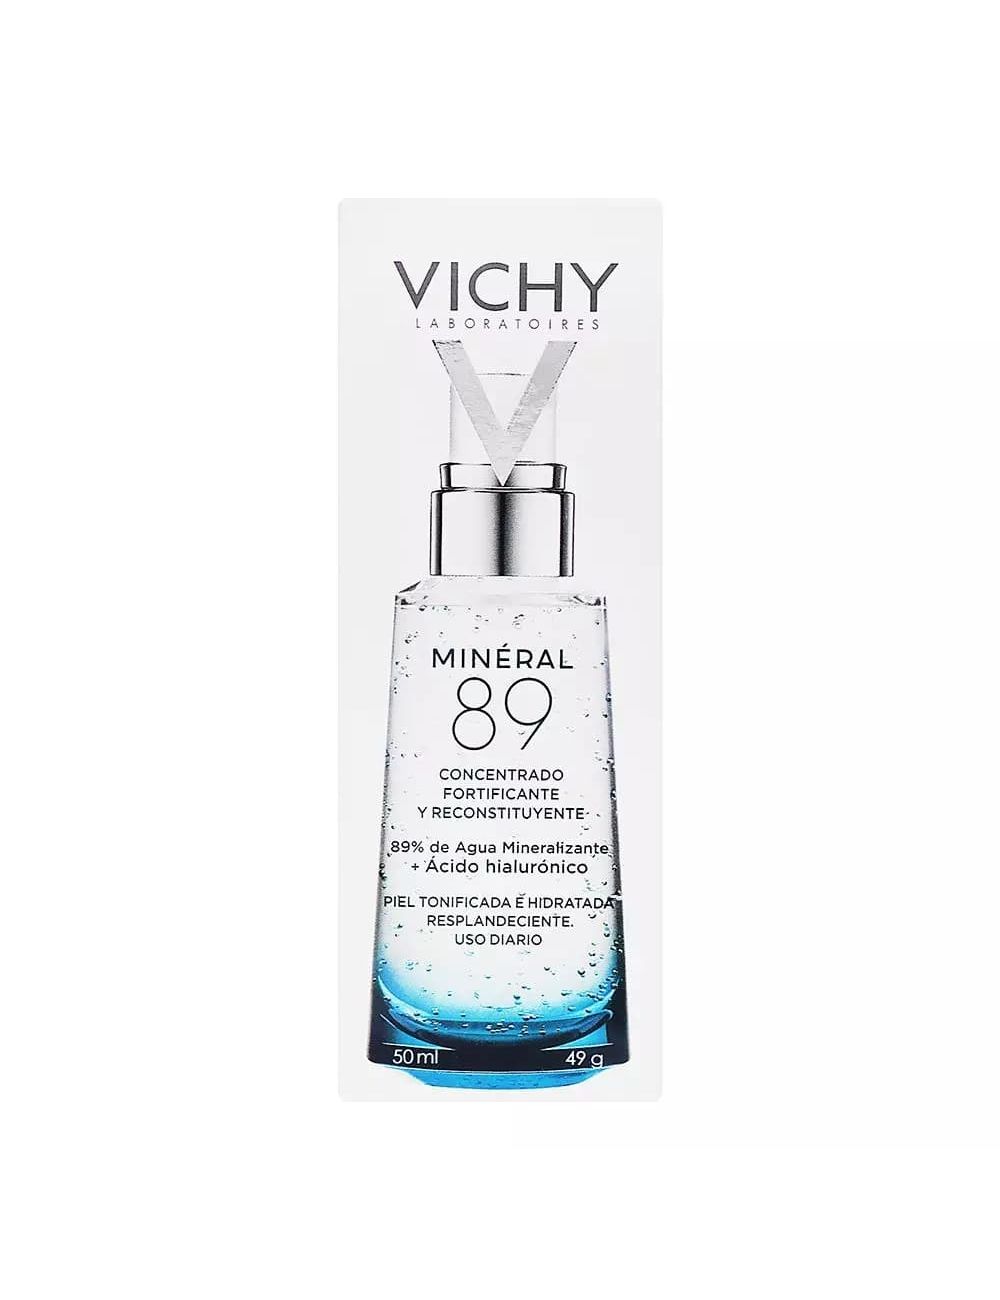 VICHY MINERAL 89 F50 ML | The Glow Shop